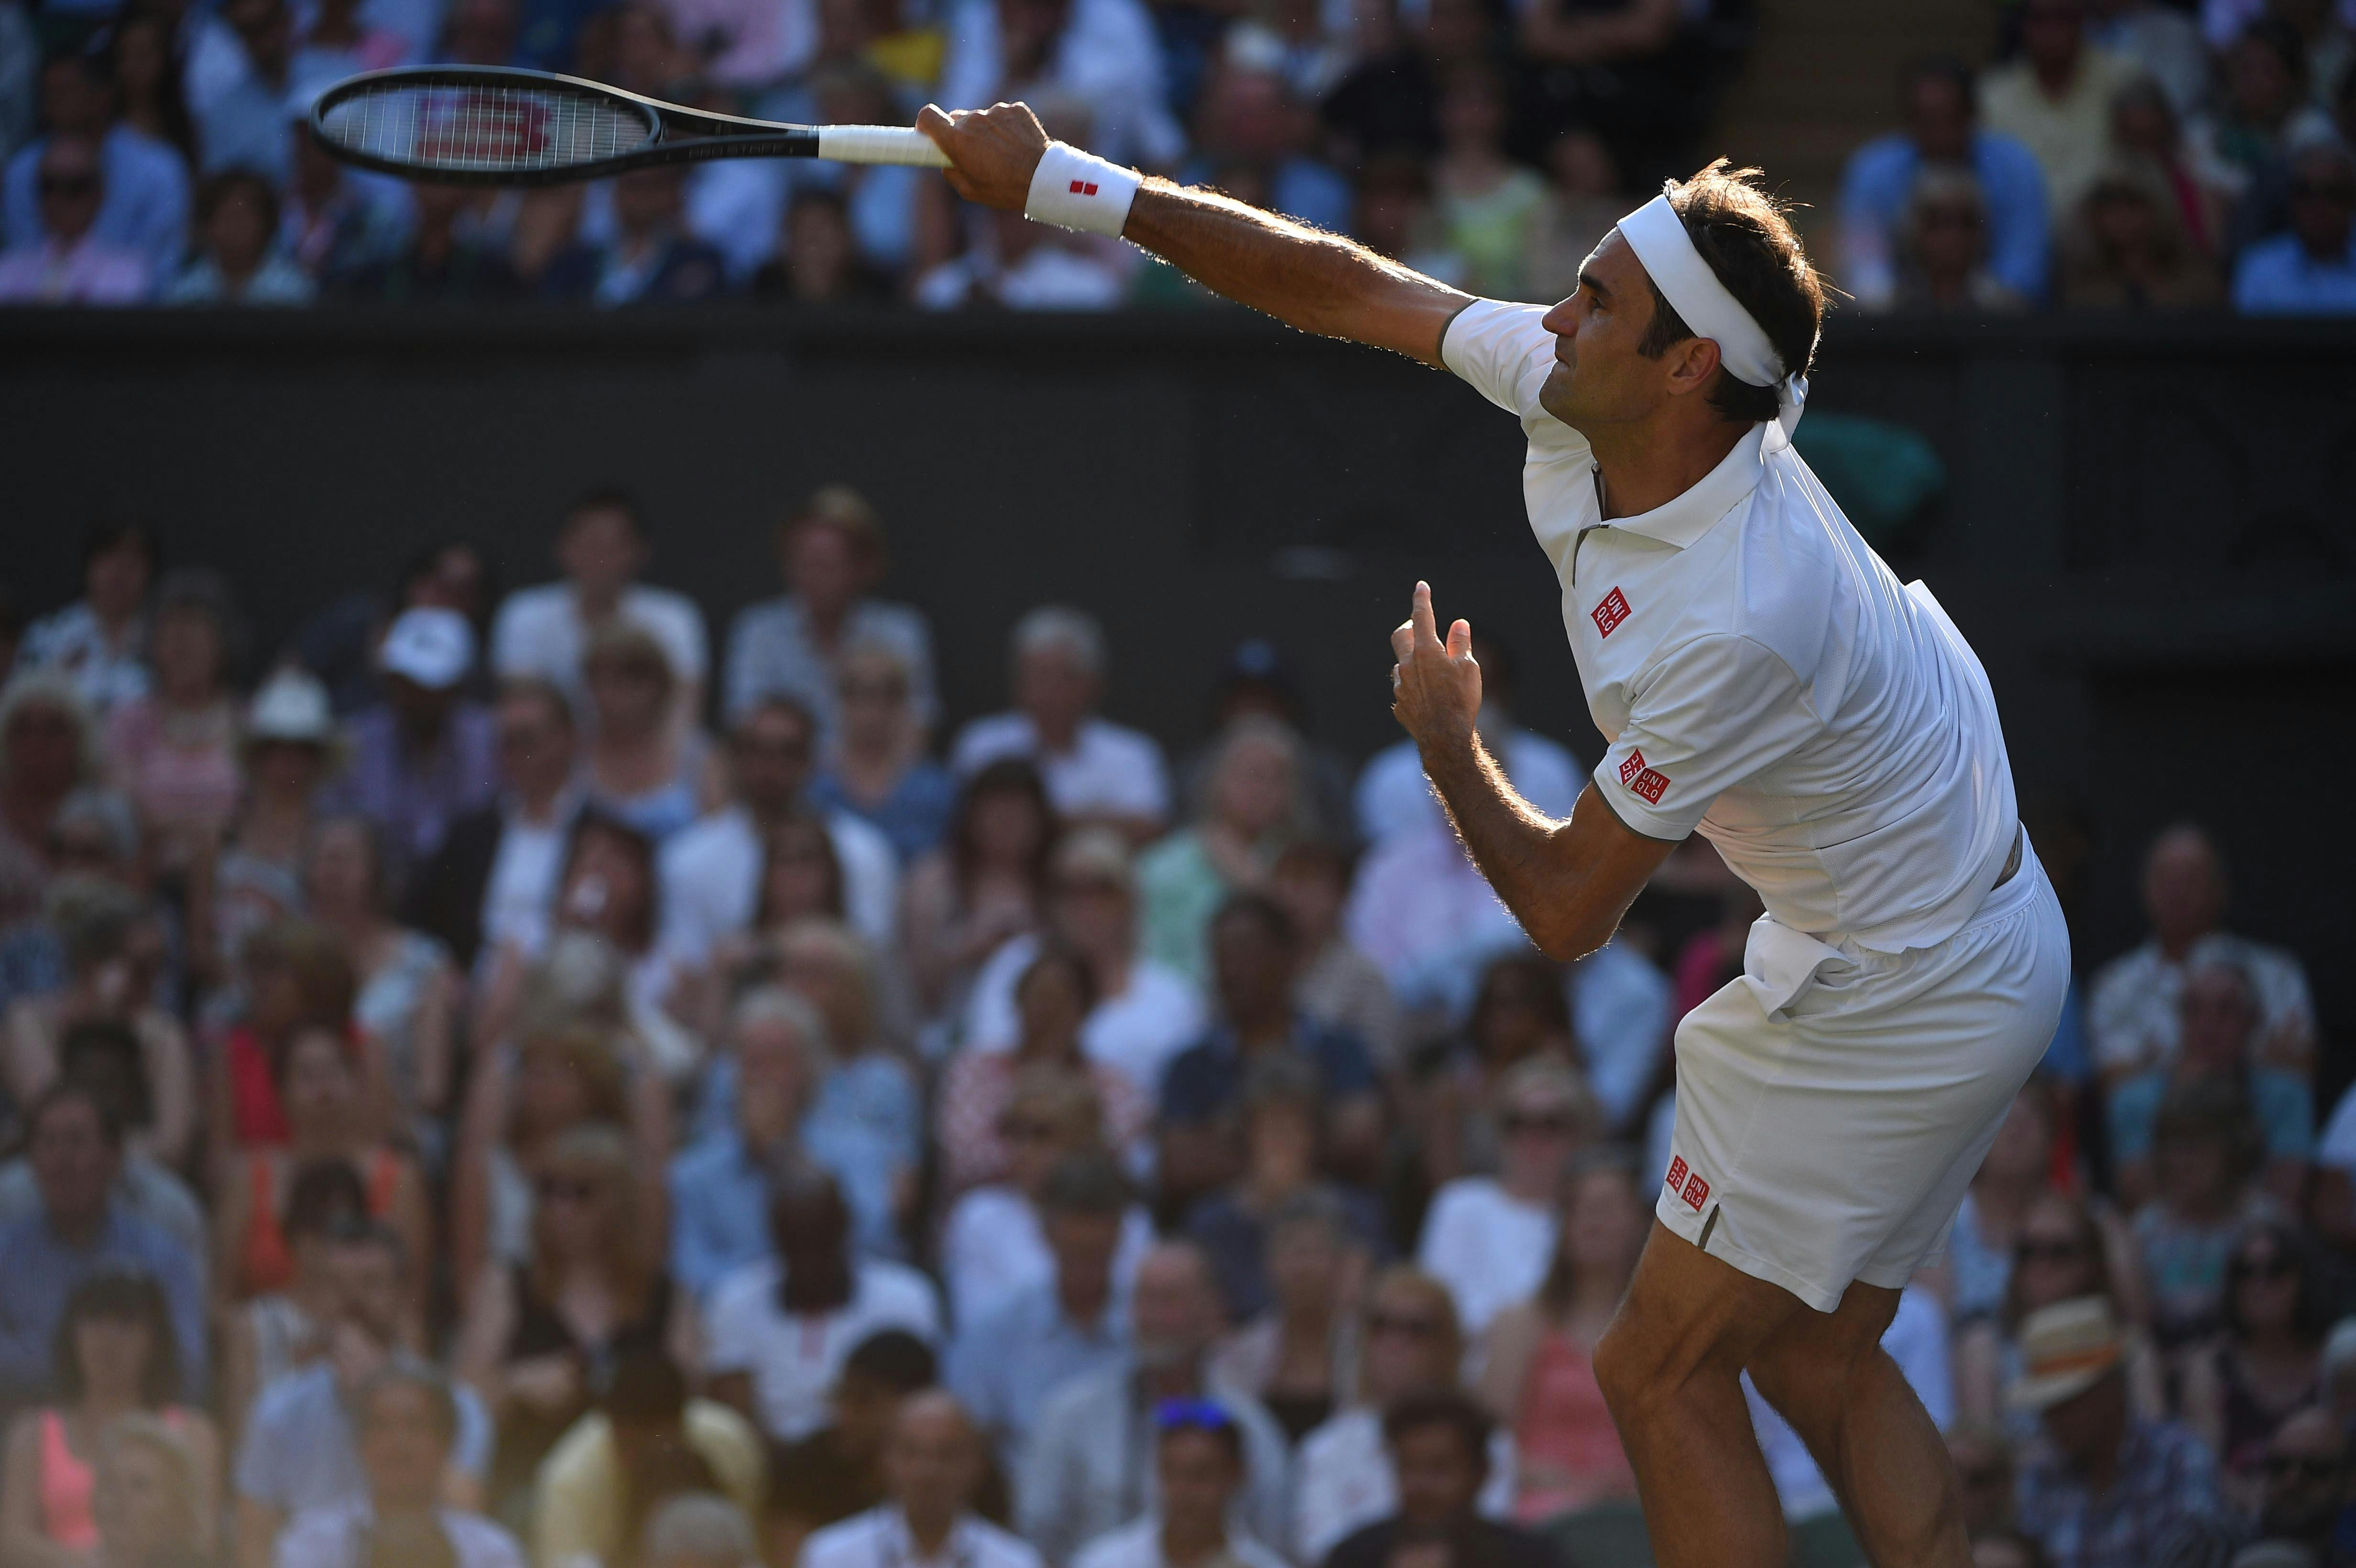 Roger Federer serving during his semi final at Wimbledon 2019